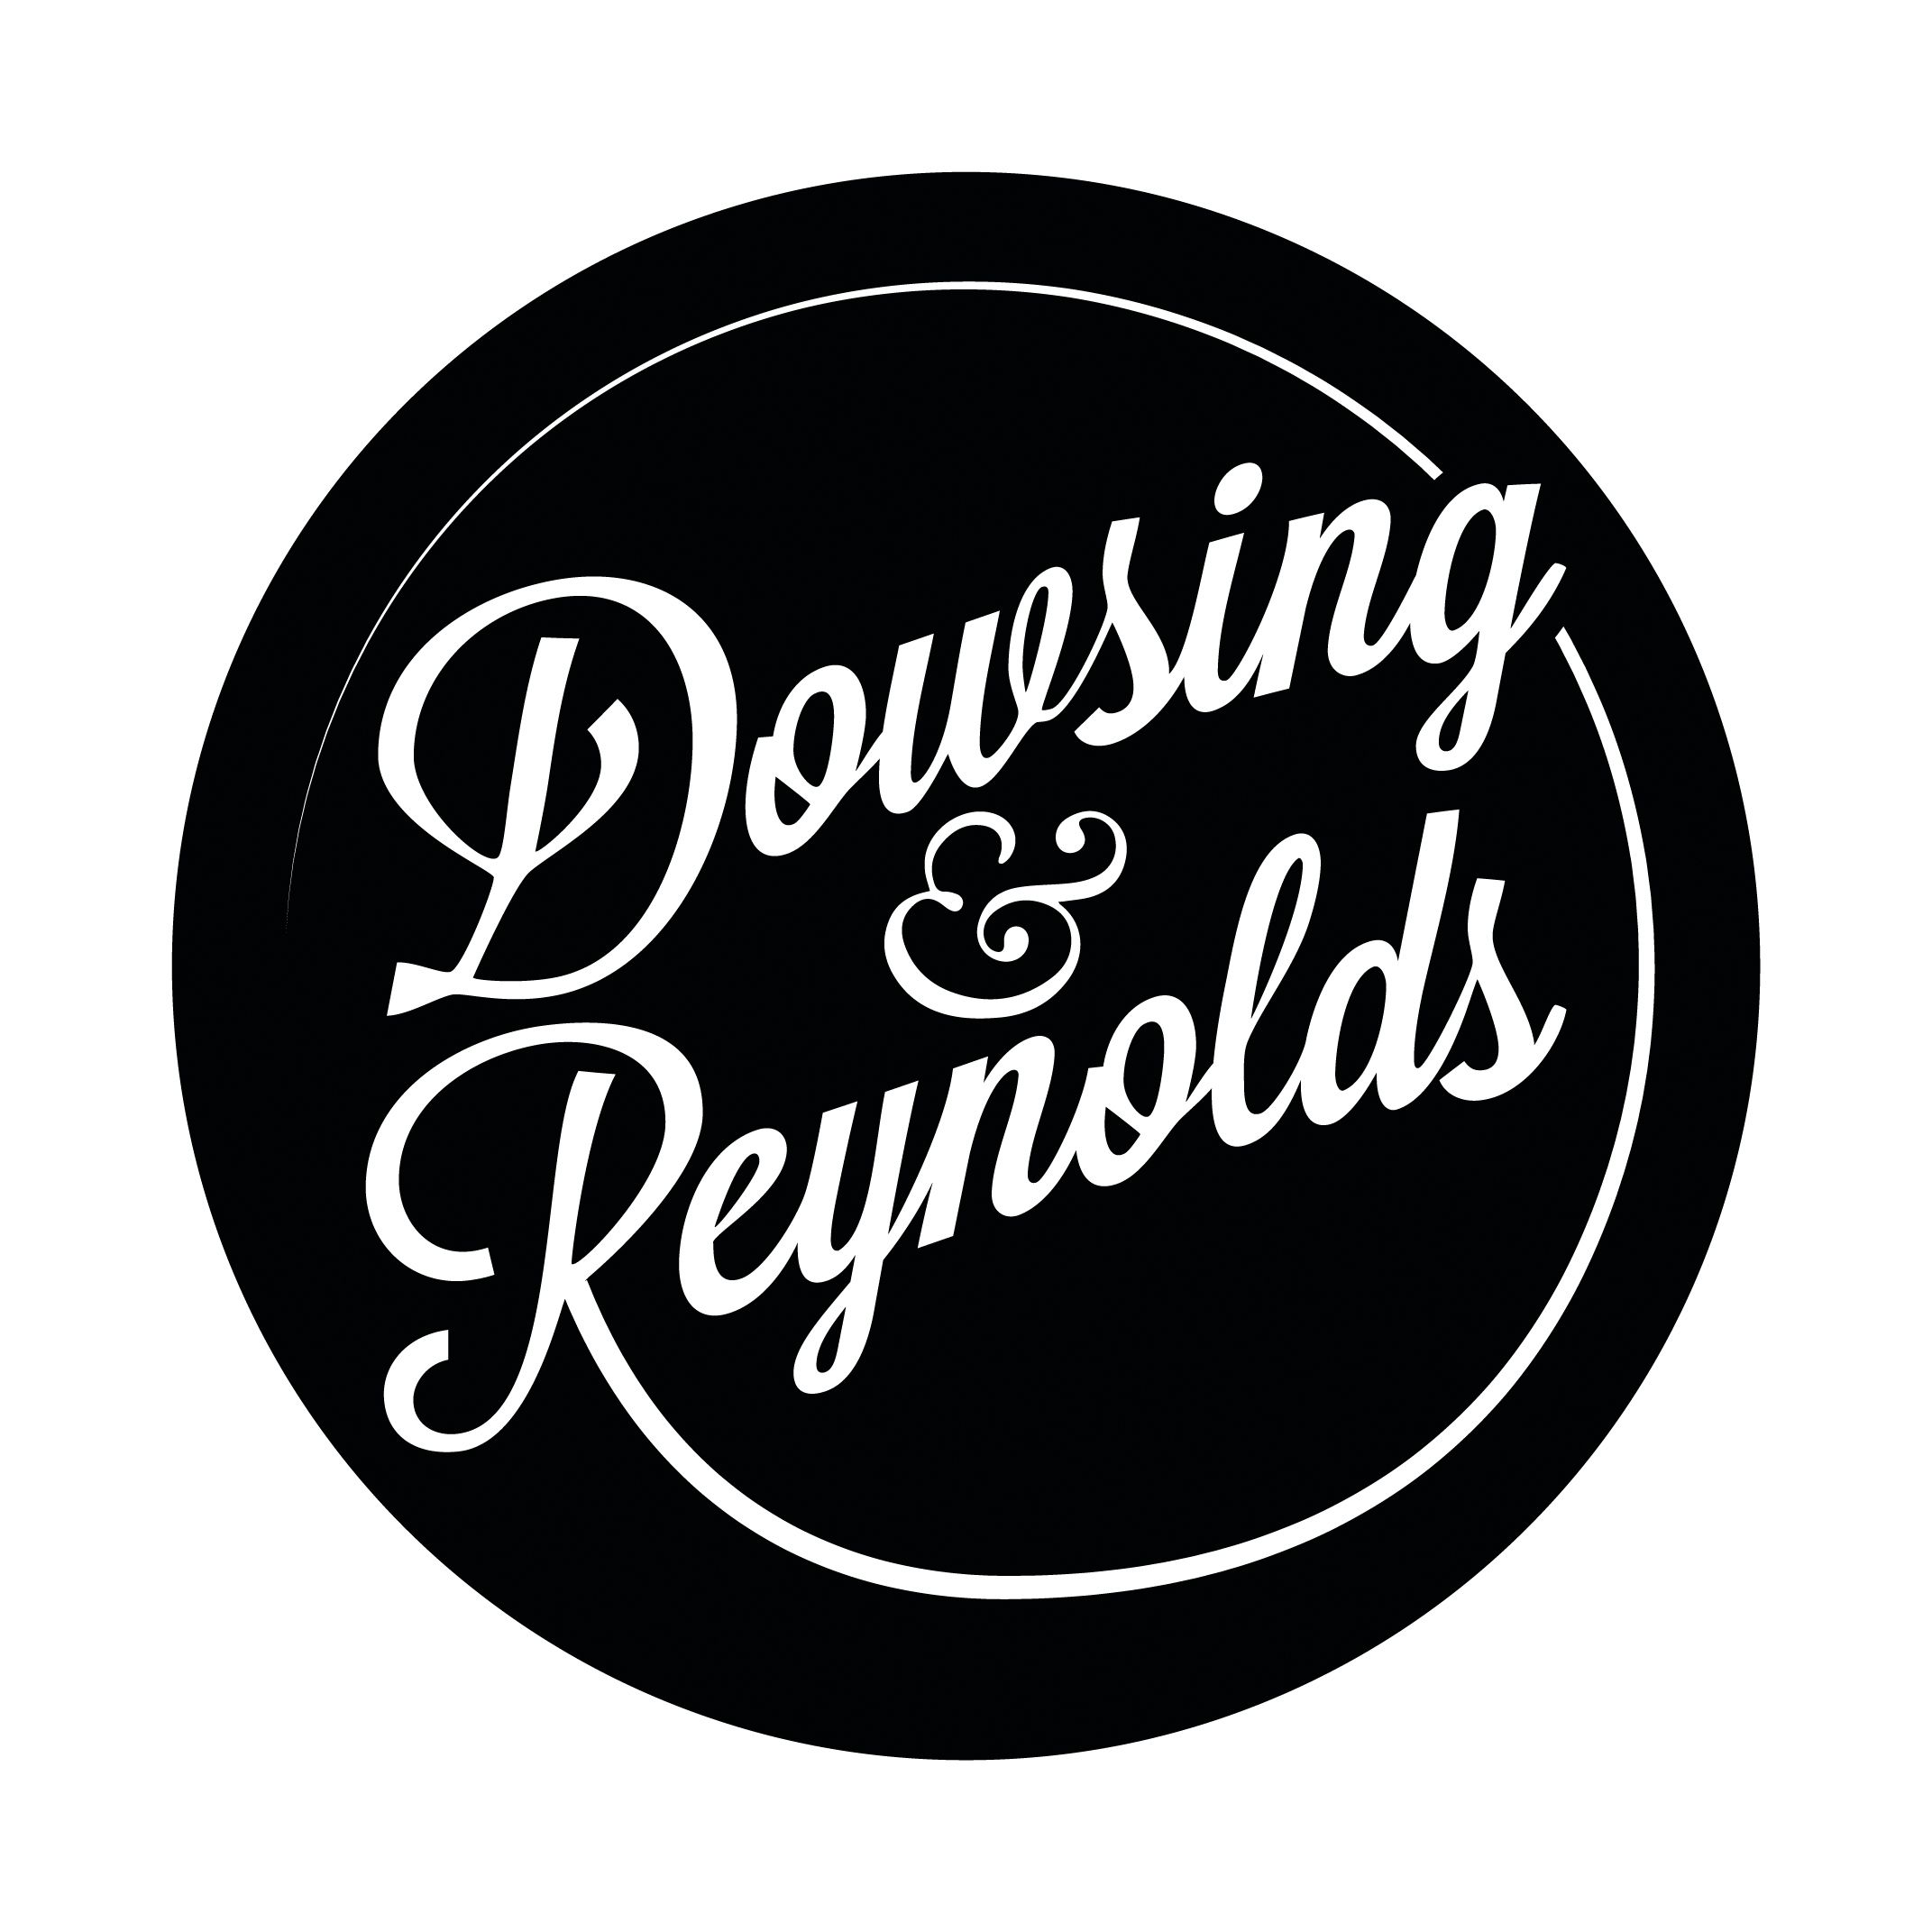 Dowsing and Reynolds